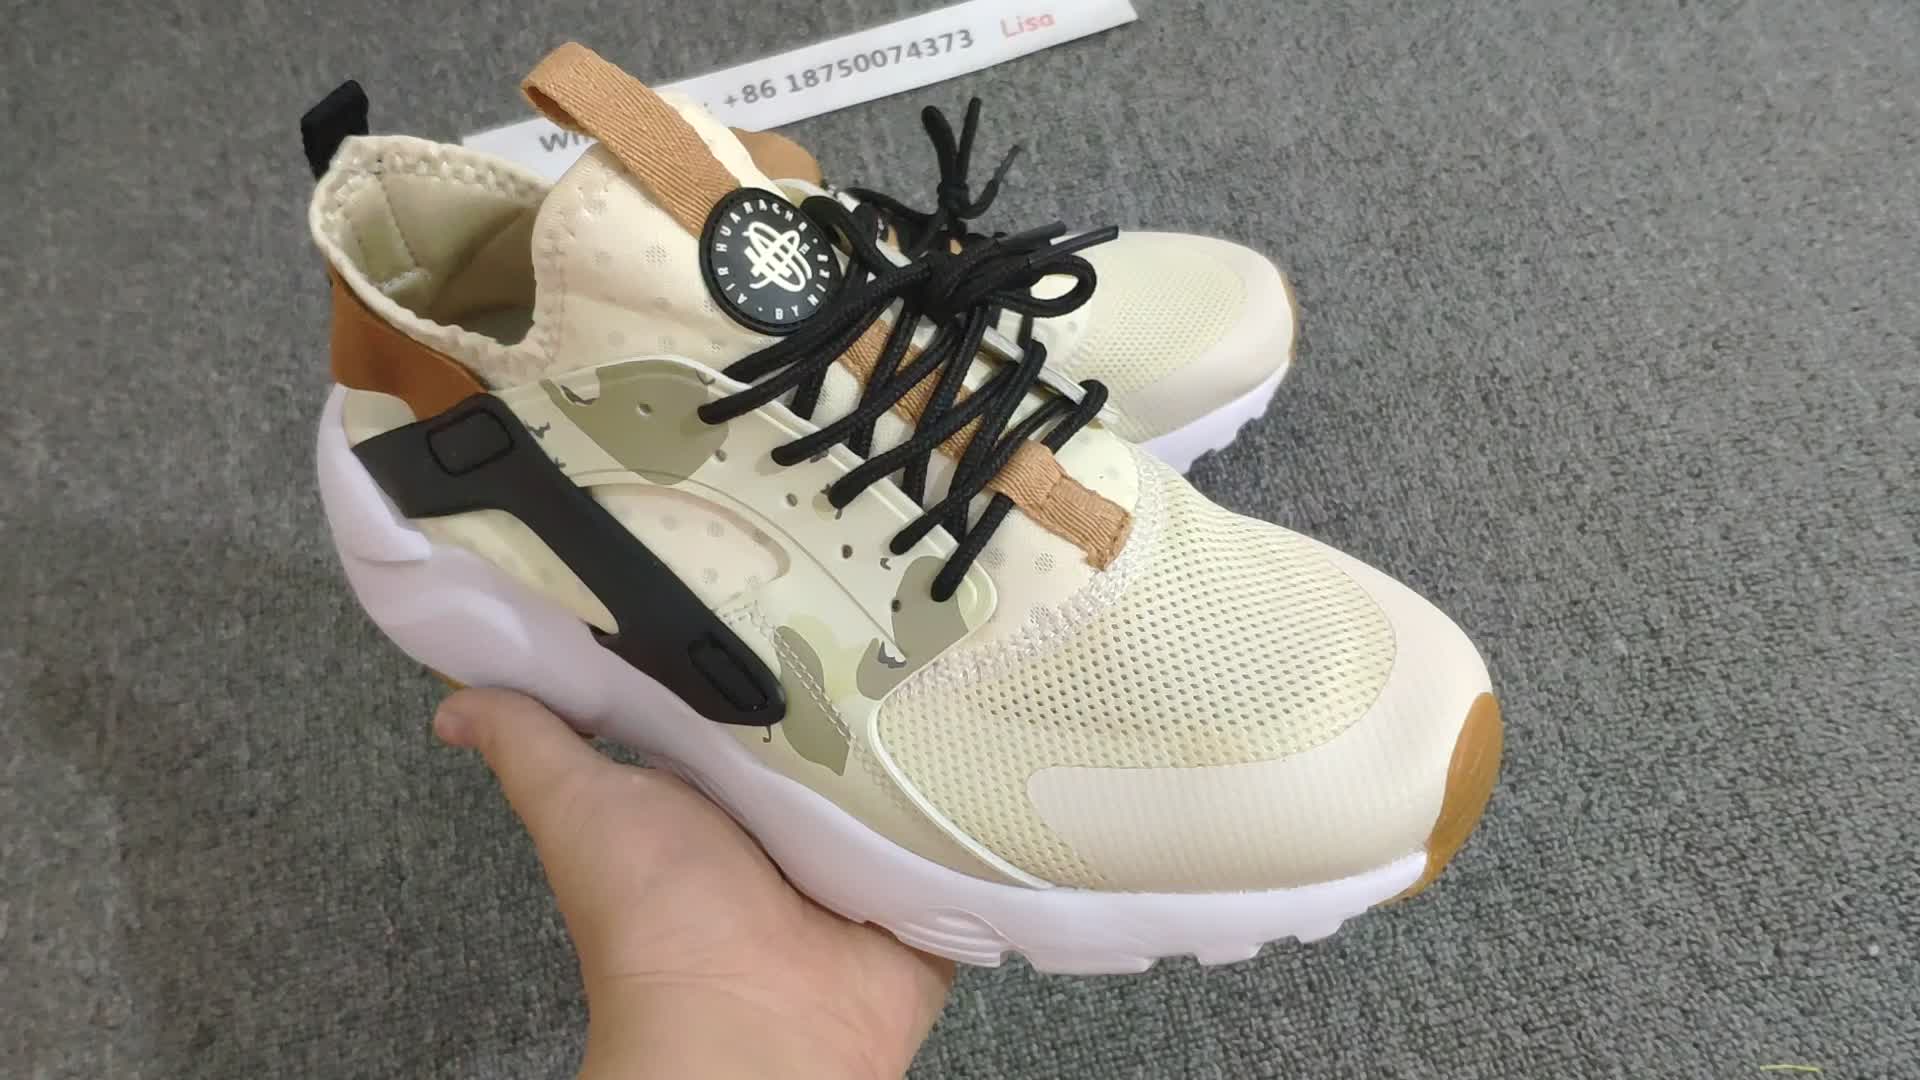 Yupoo shoes china on Instagram: “Nike shoes whatsapp +